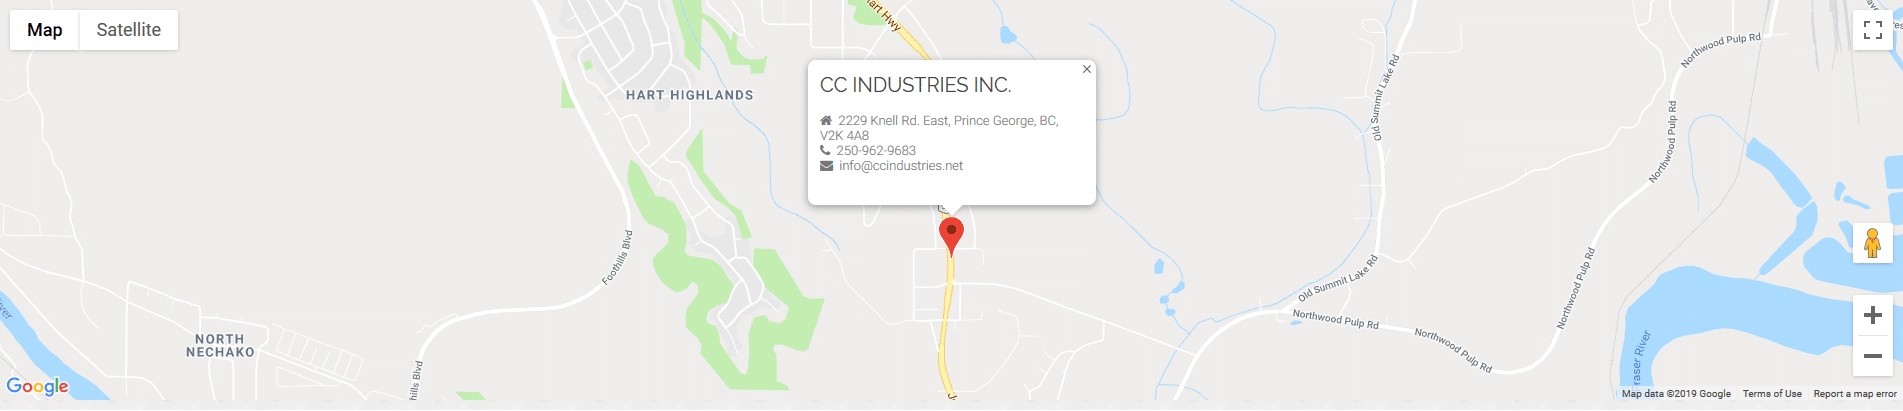 CC Industries Location